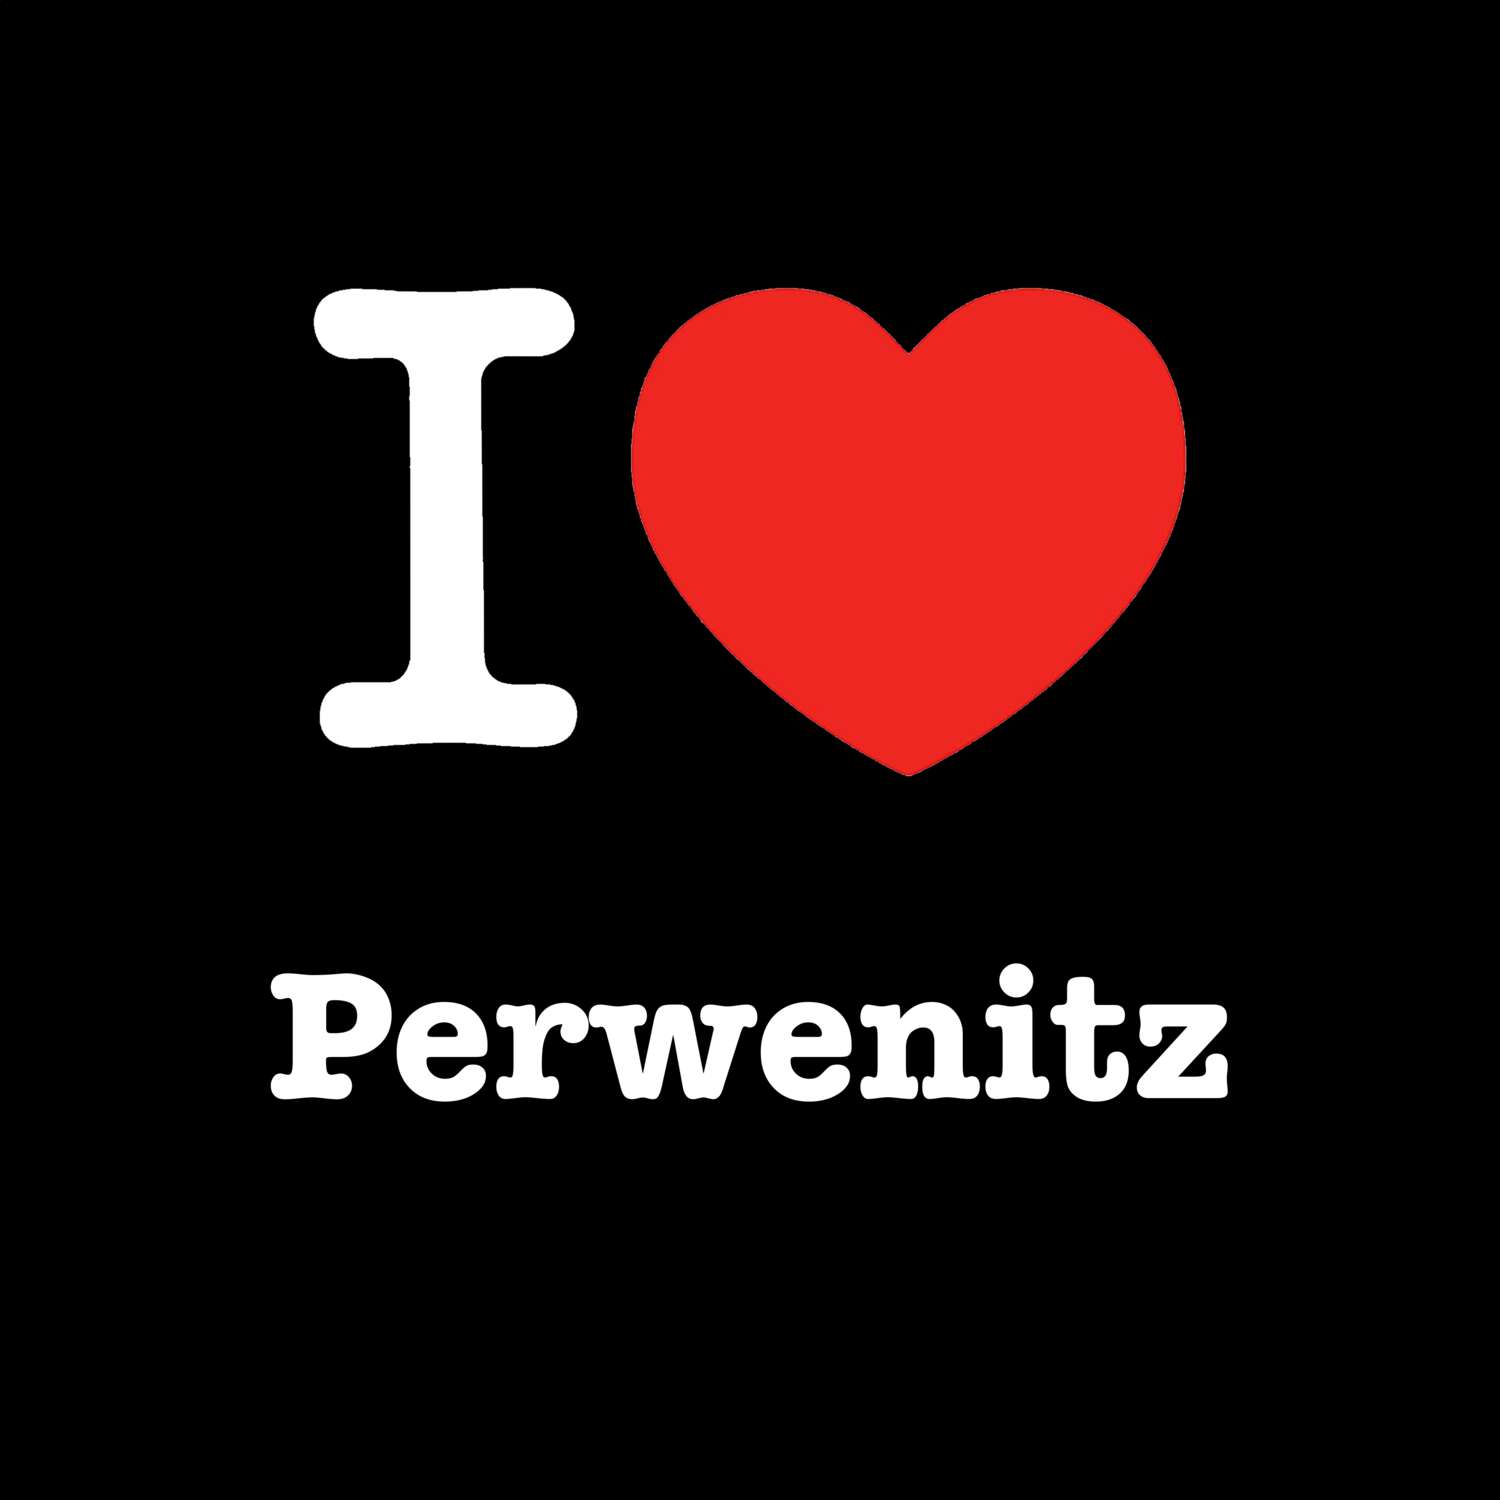 Perwenitz T-Shirt »I love«